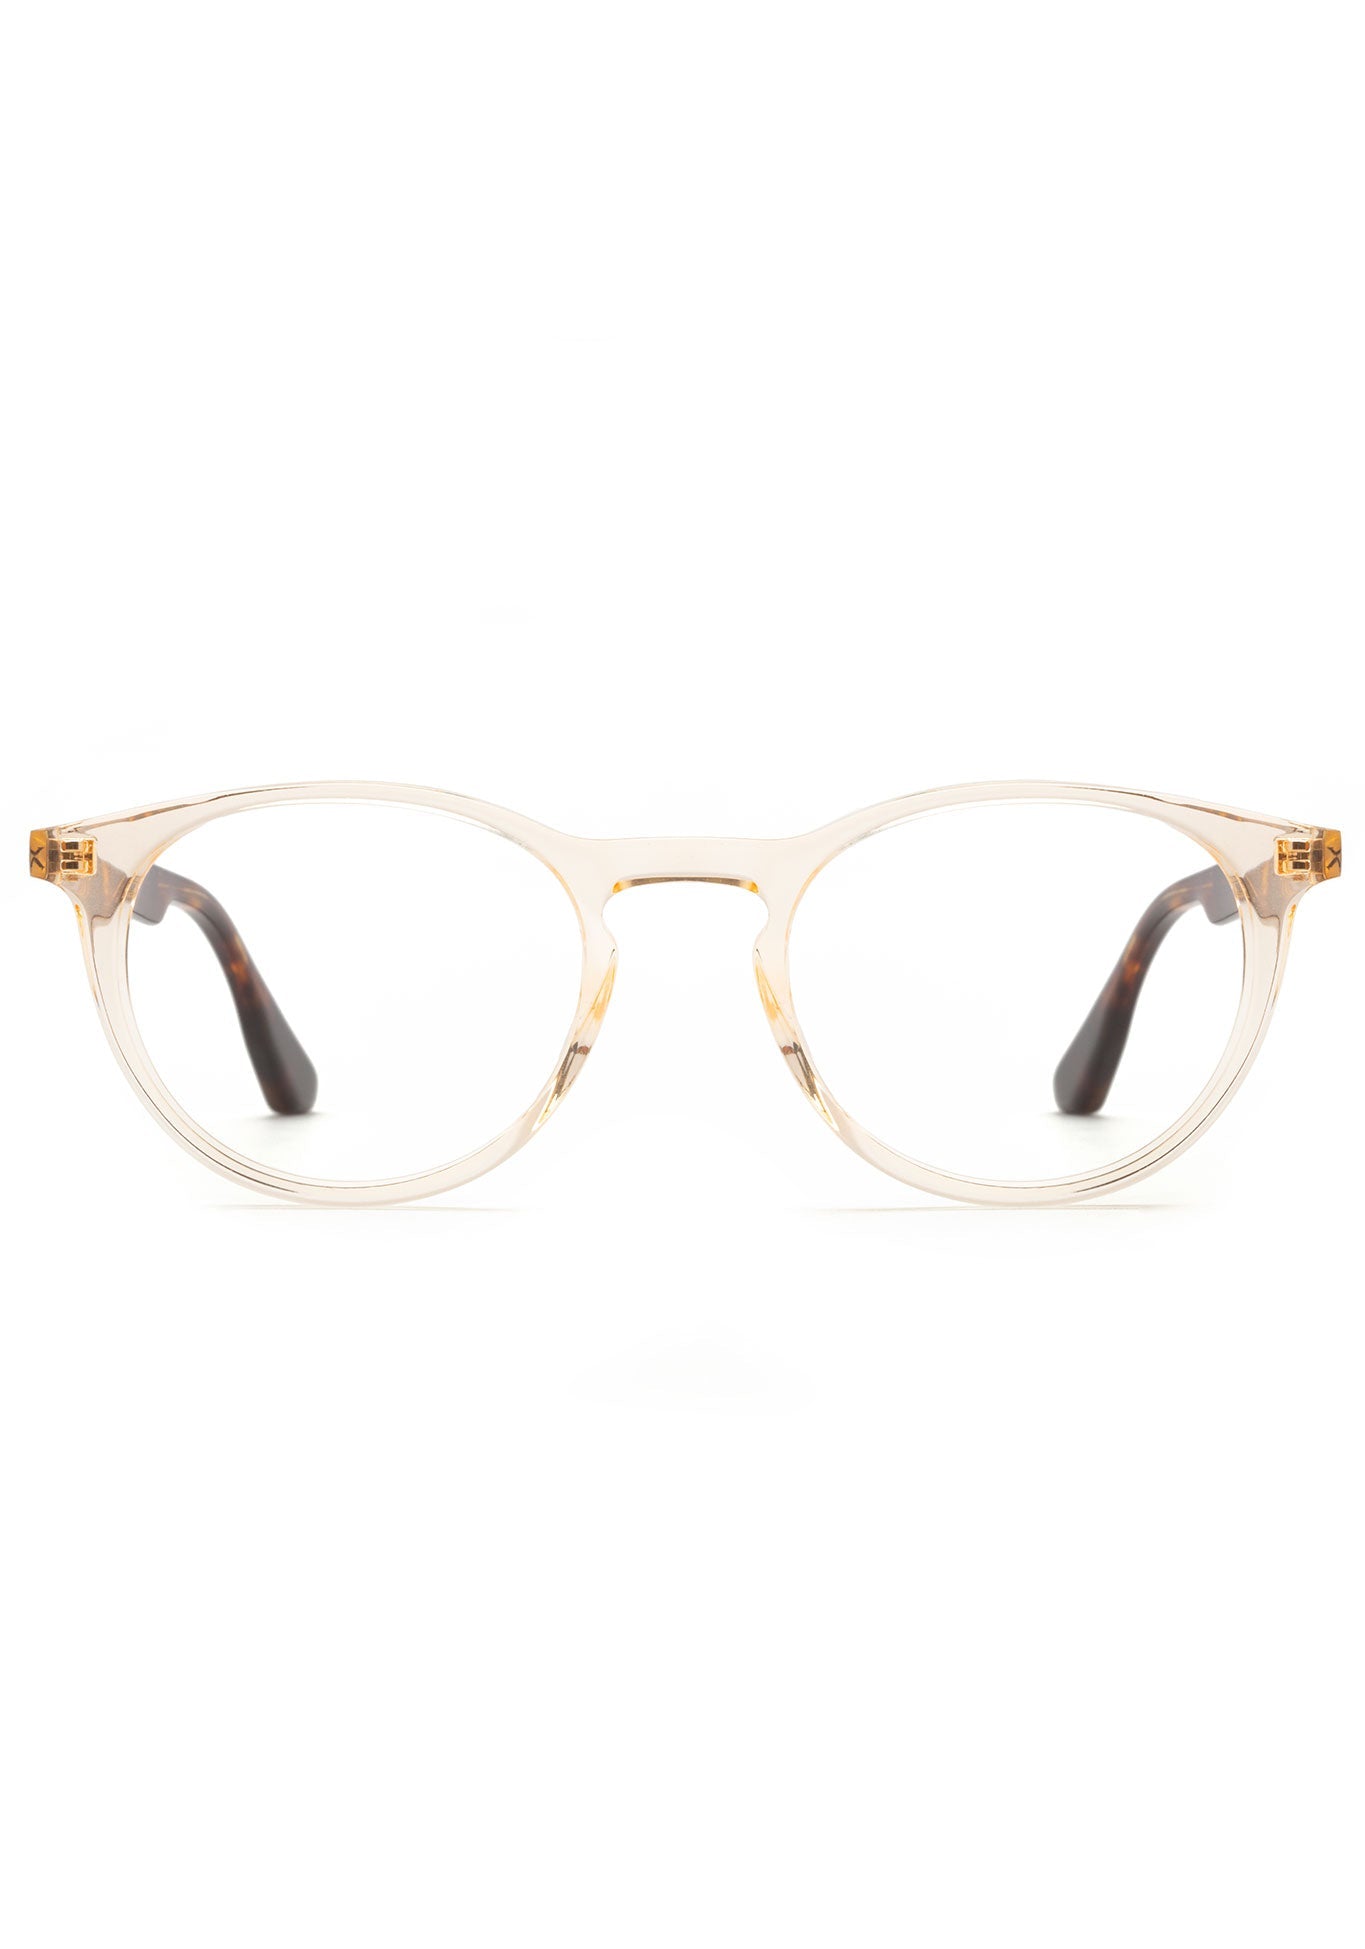 KREWE BAXTER | Haze + Rye Handcrafted, luxury yellow tinted acetate eyeglasses